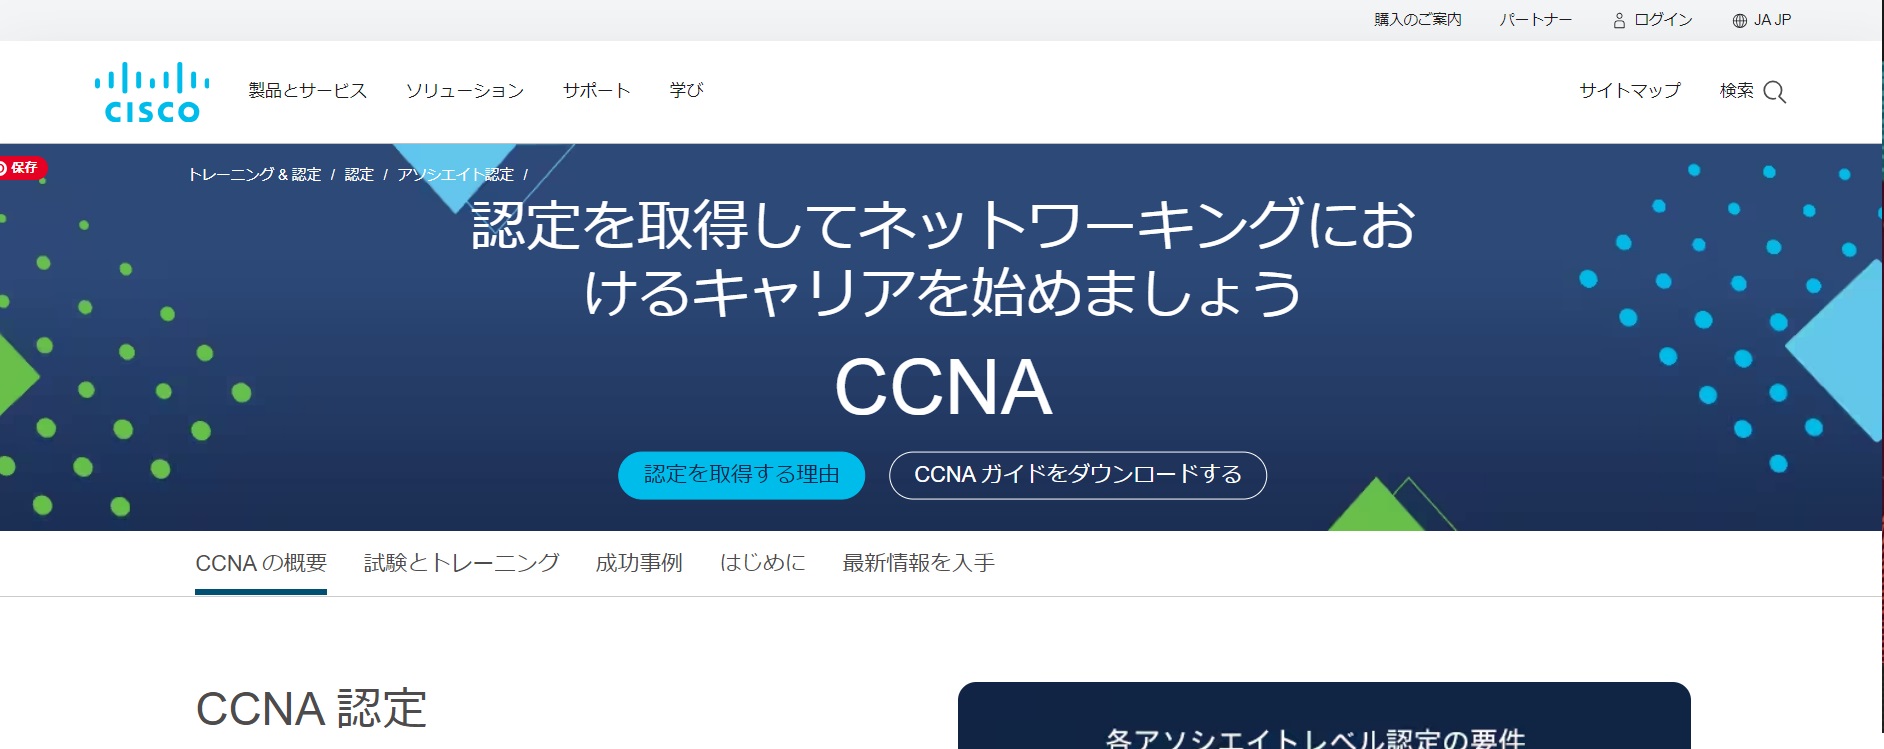 CCNA - Training & Certifications - Cisco